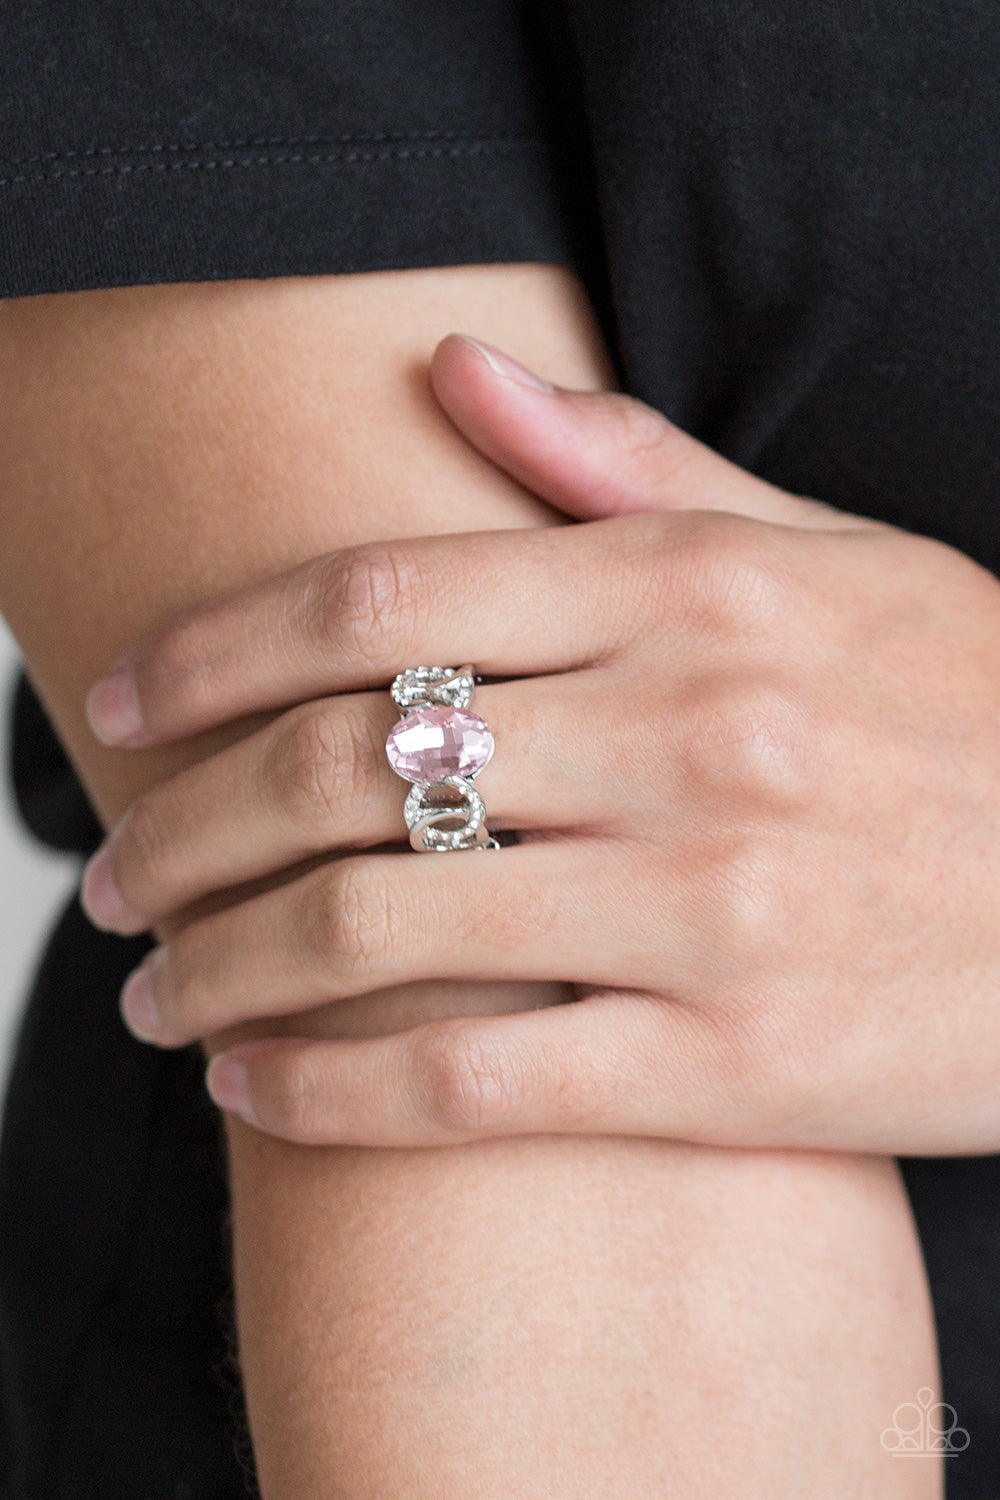 Paparazzi Supreme Bling - Pink - White Rhinestones - Ring - $5 Jewelry with Ashley Swint